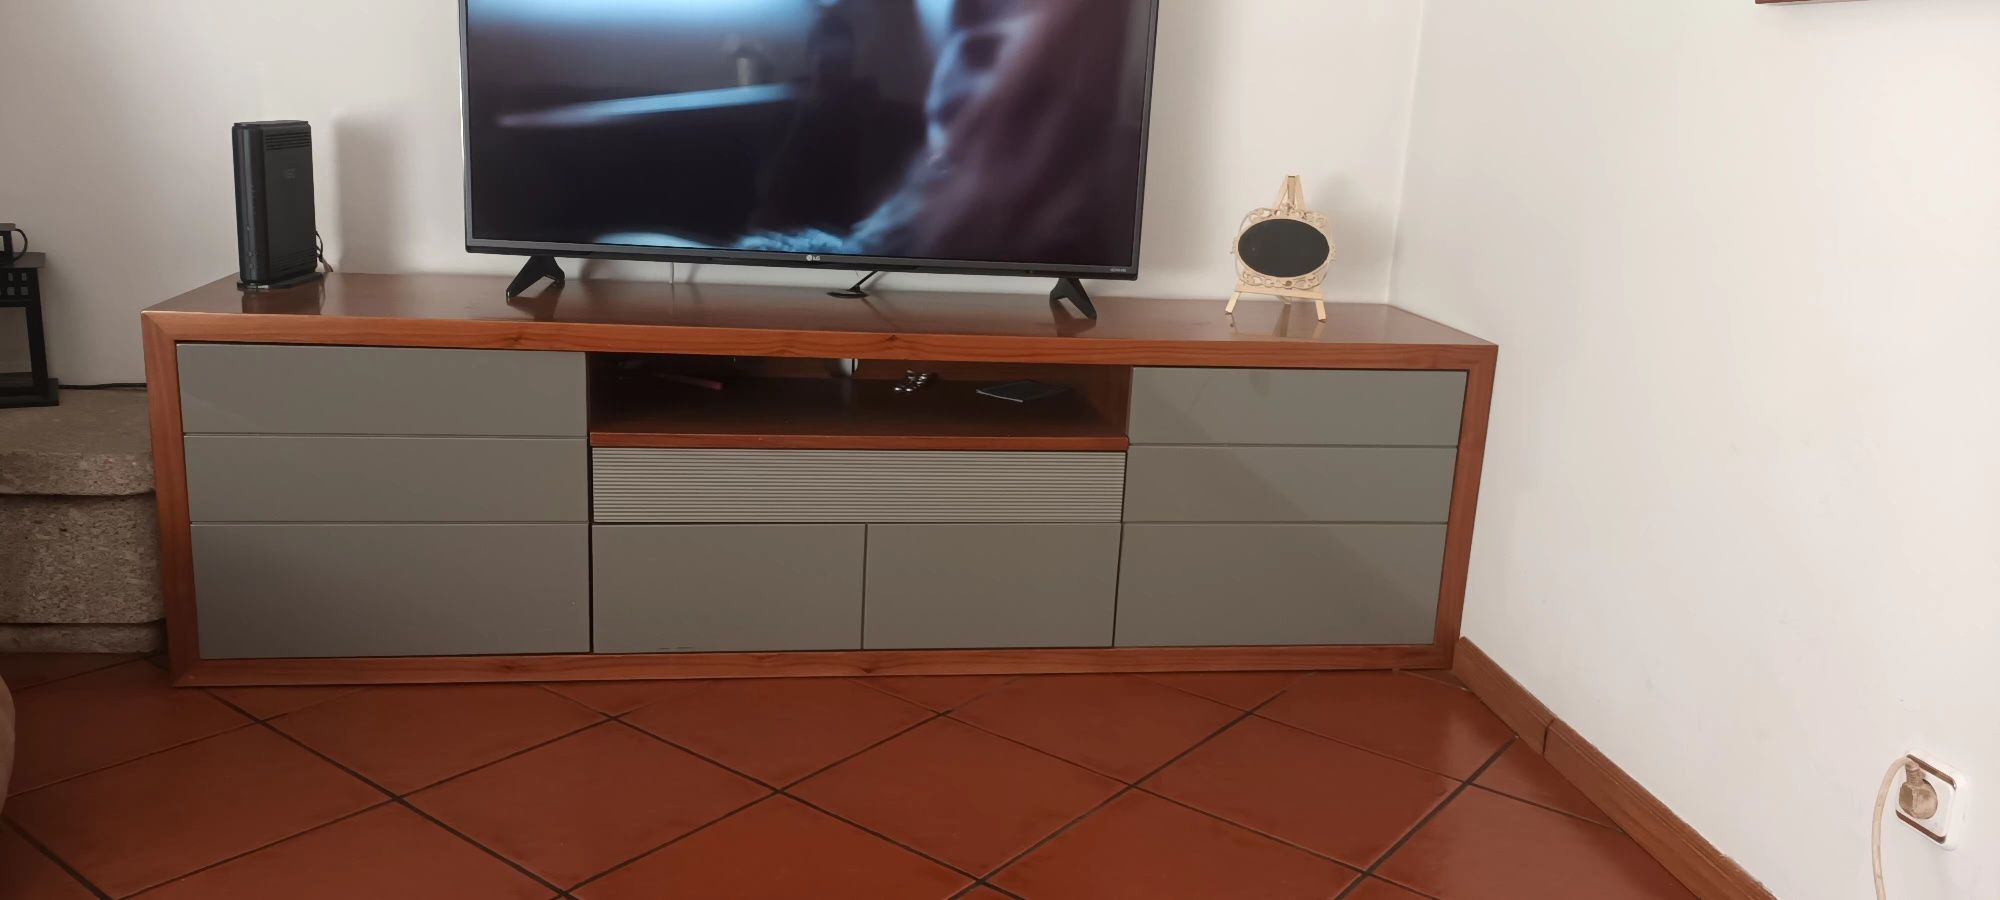 500€ sofá + movel tv